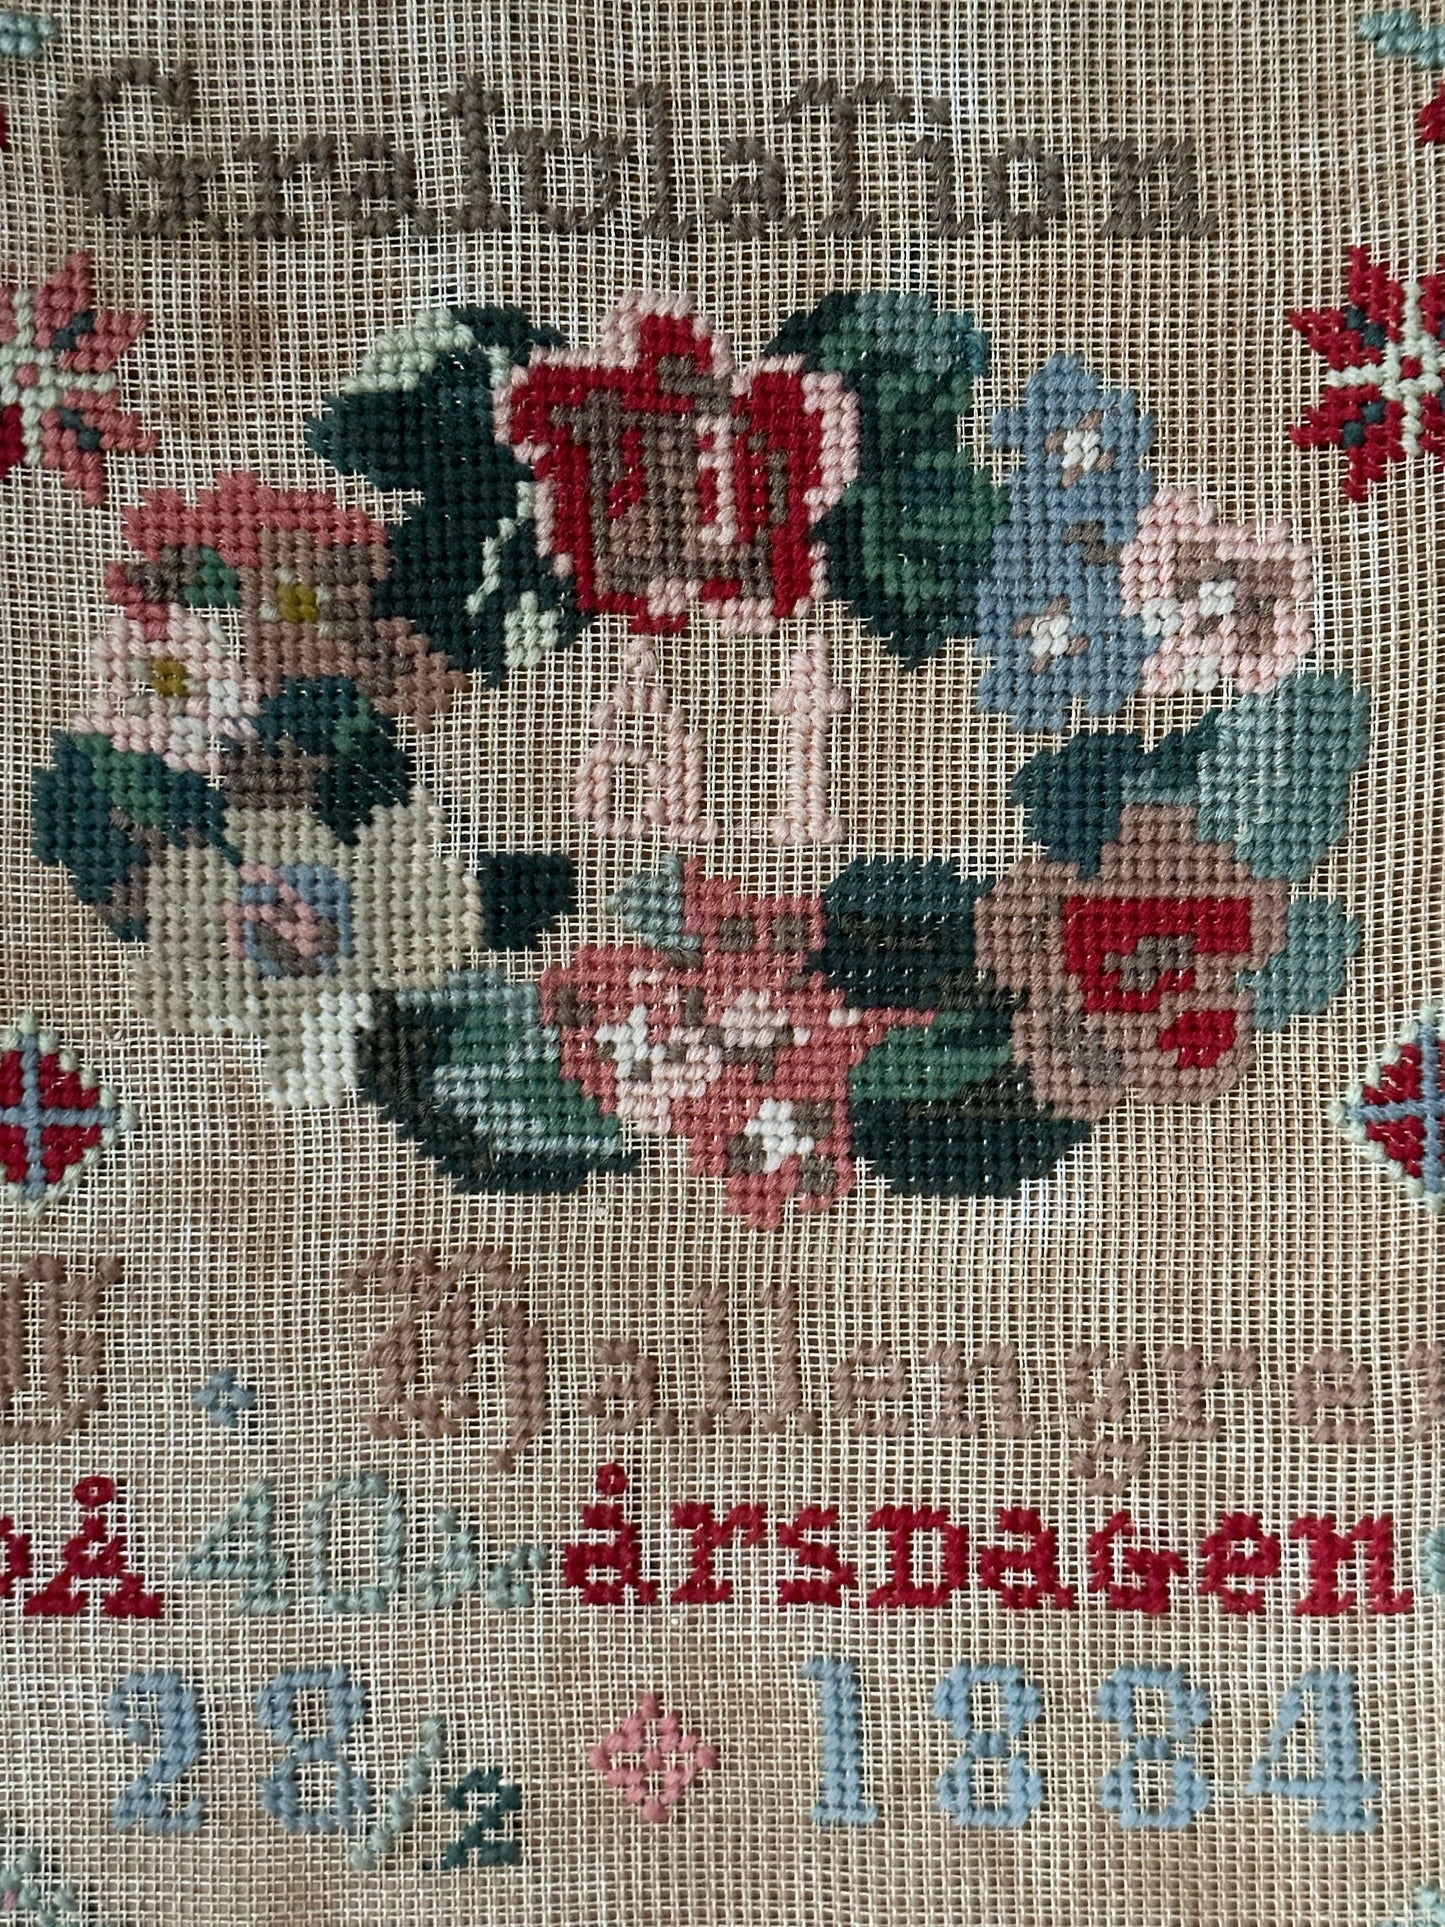 Antique Swedish Hand Stitched Sampler